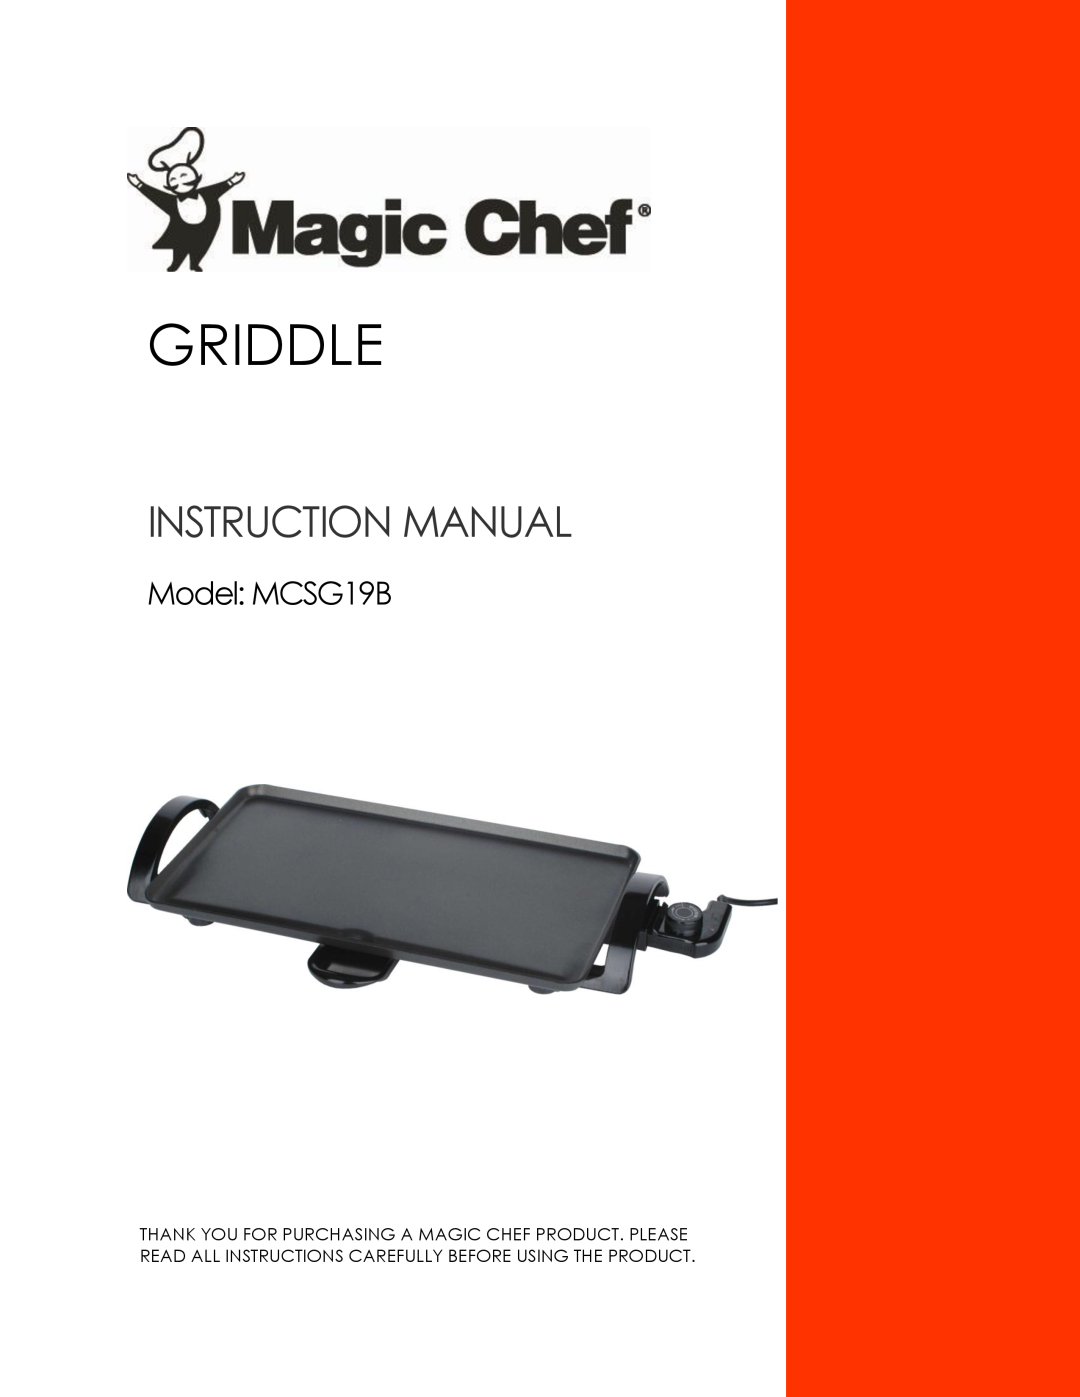 Magic Chef instruction manual Griddle, Instruction Manual, Model MCSG19B 